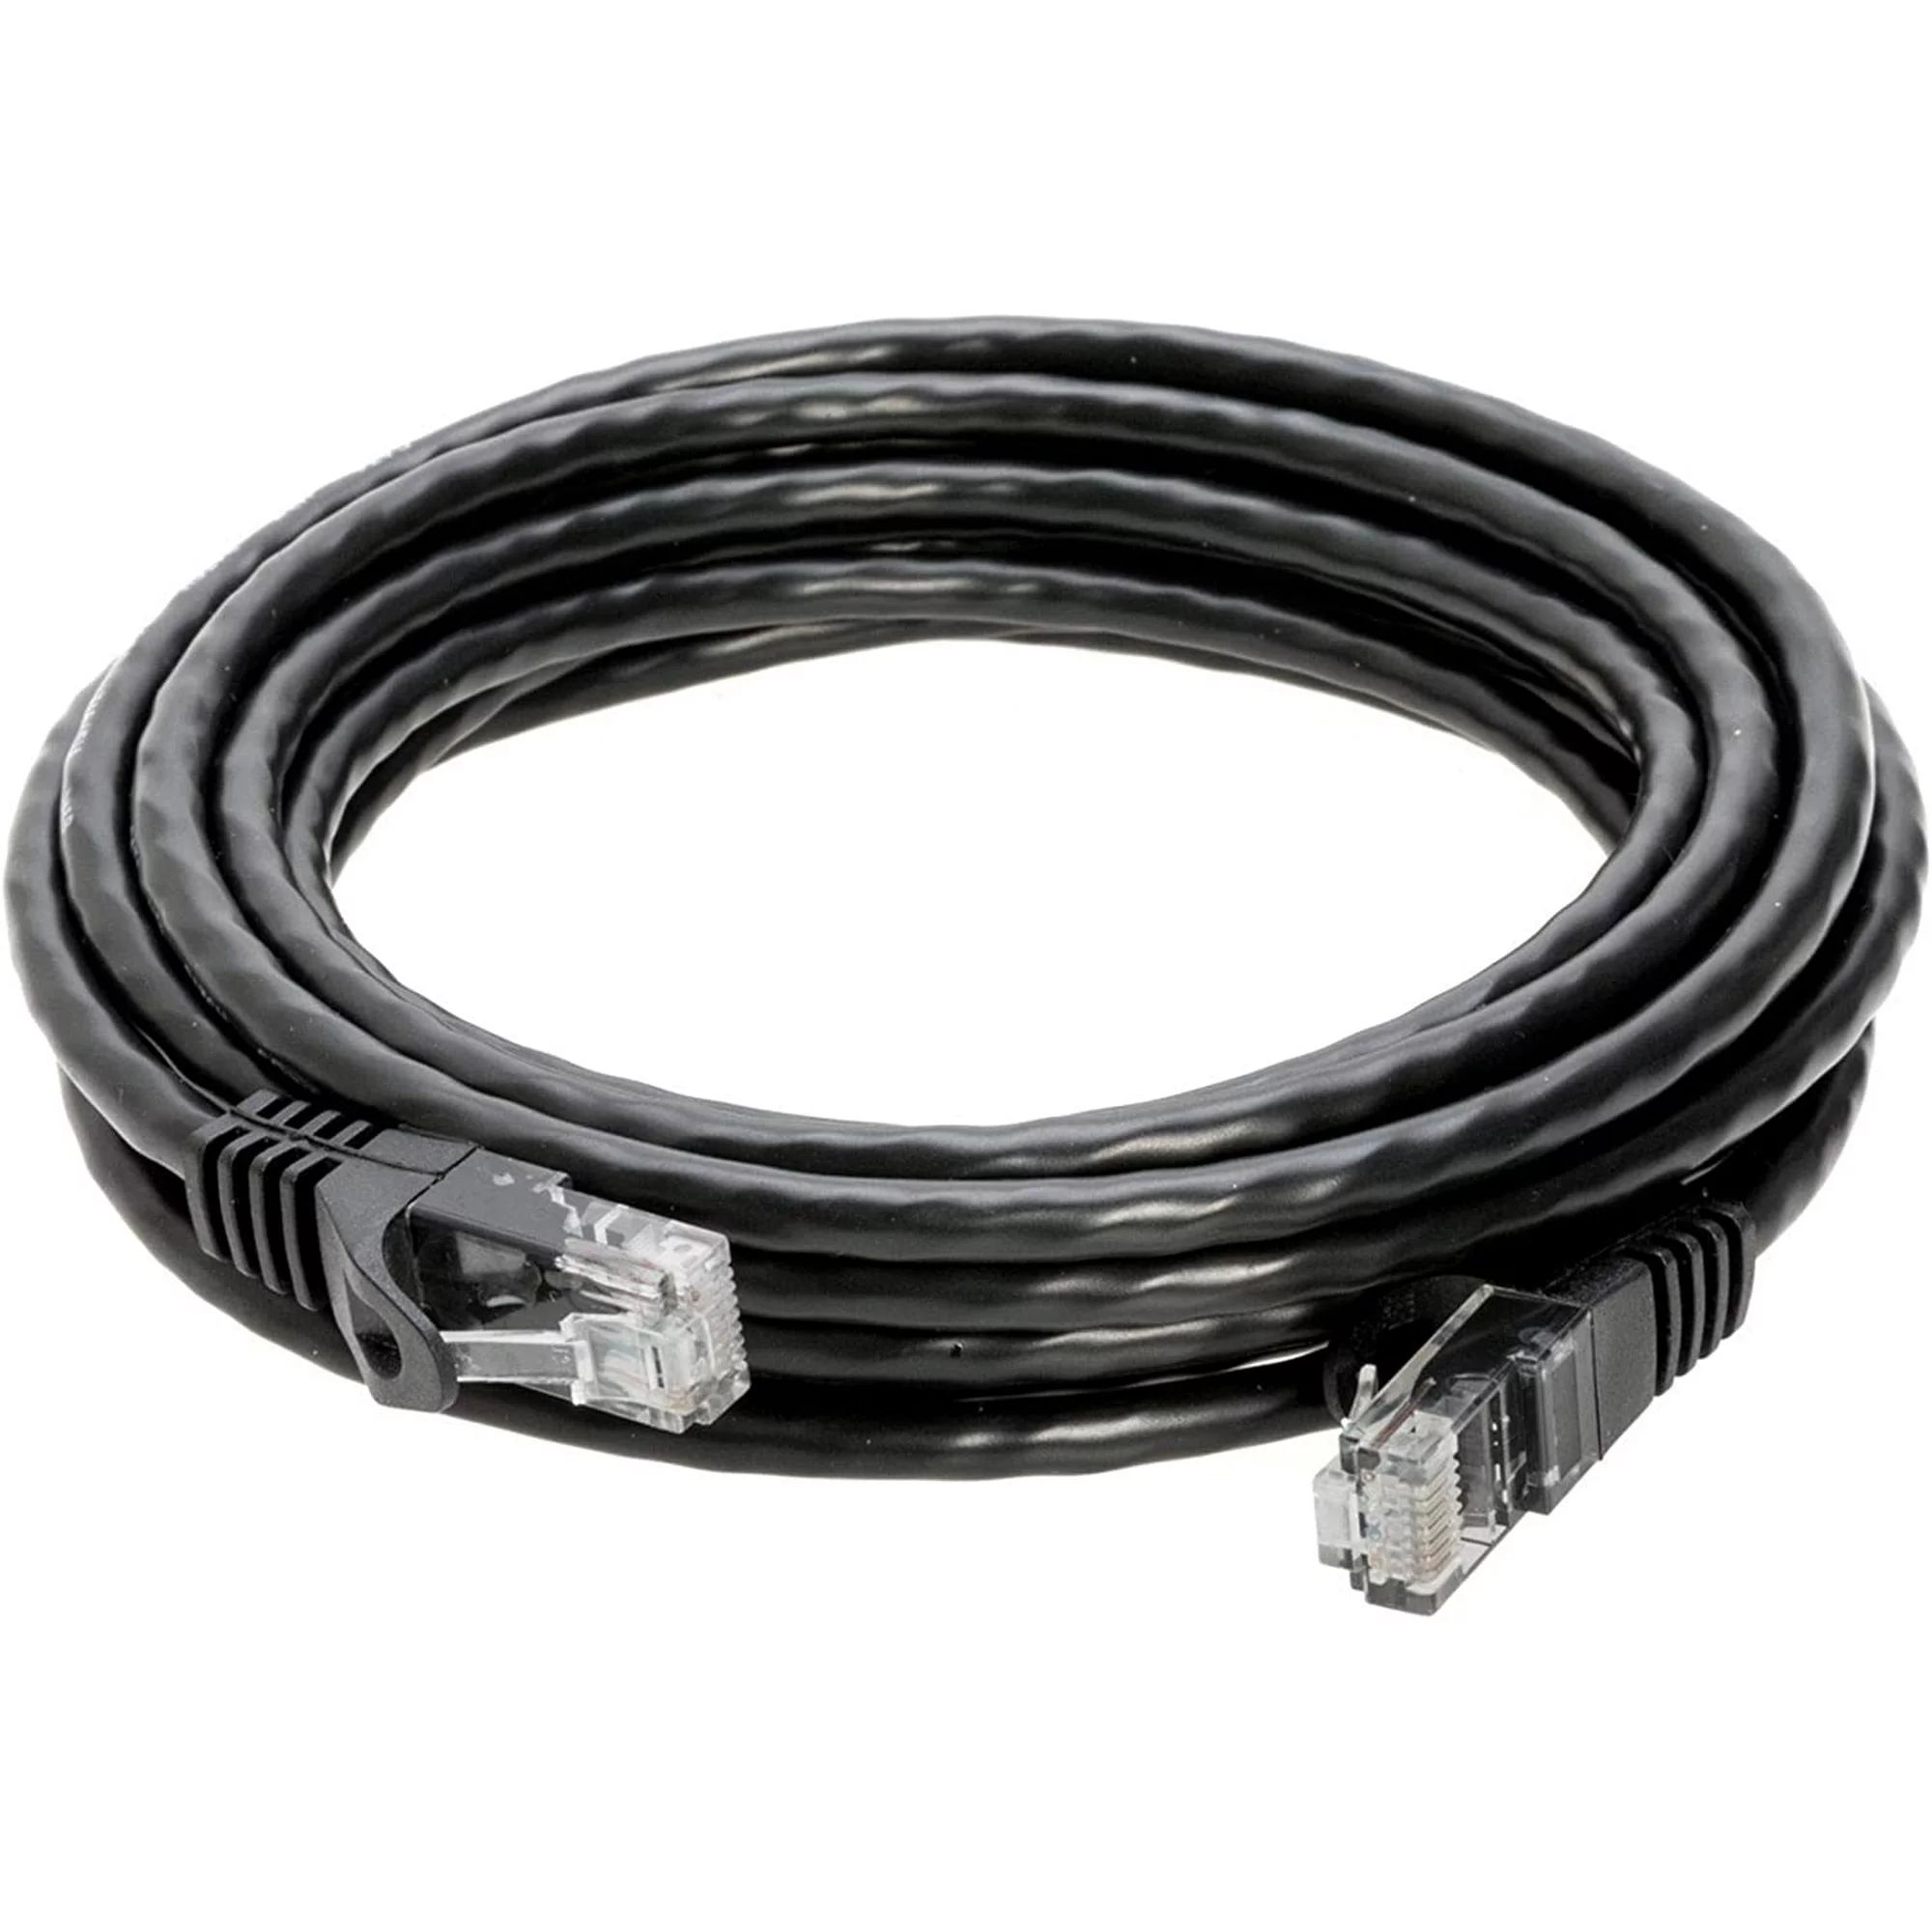 StarTech.com Cat5e Ethernet Cable - 30 ft - Blue - Patch Cable - Molded  Cat5e Cable - Long Network Cable - Ethernet Cord - Cat 5e Cable - 30ft